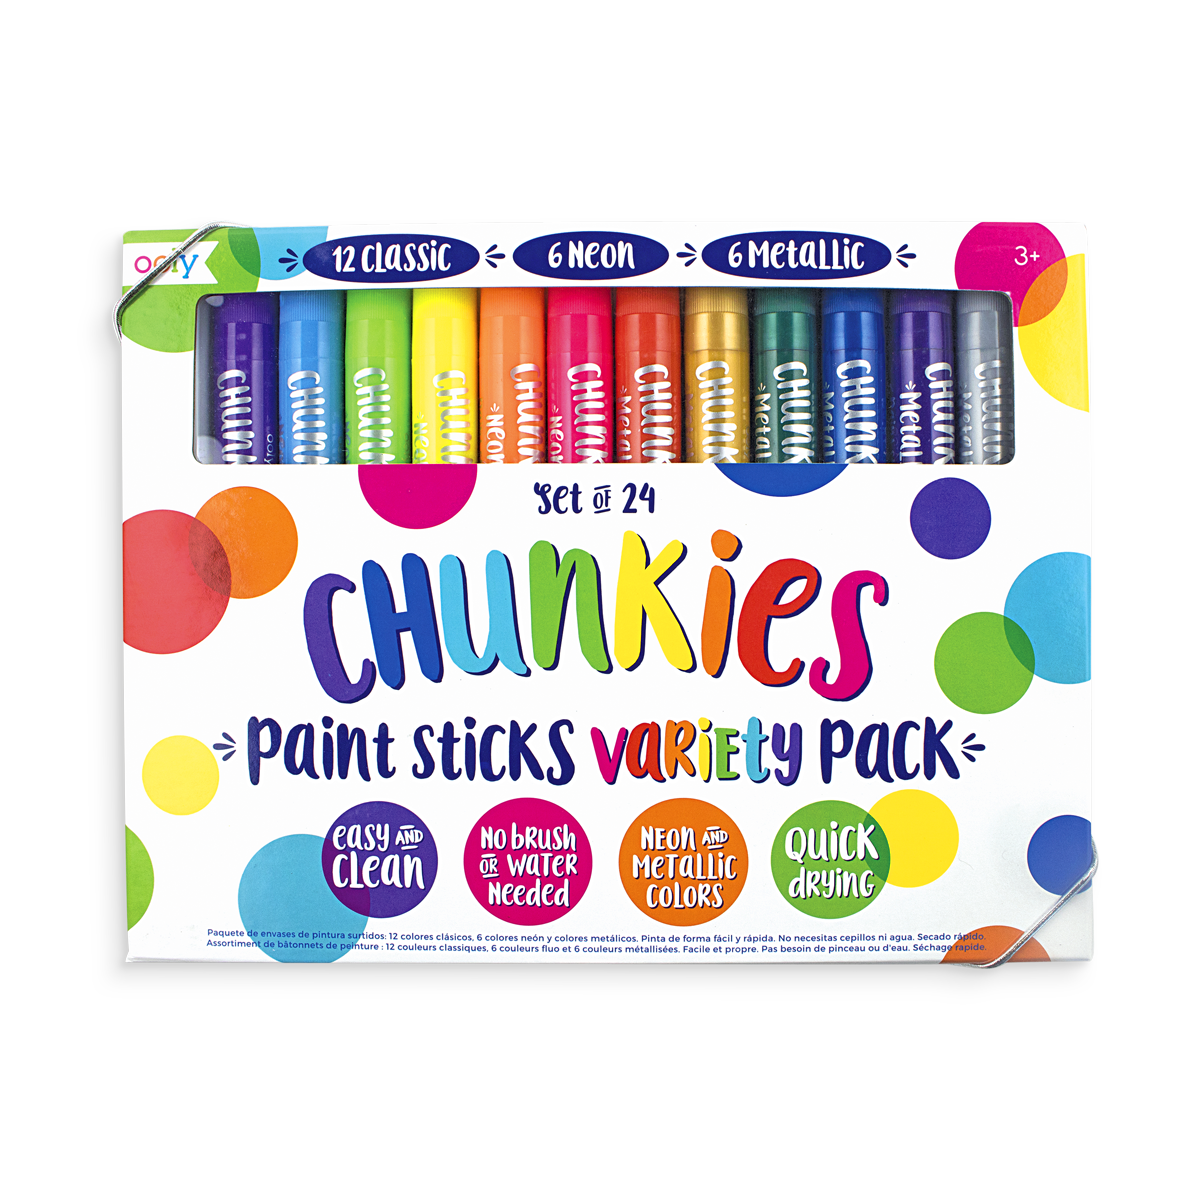 OOLY Chunkies Paint Sticks Variety Pack Paint Sticks